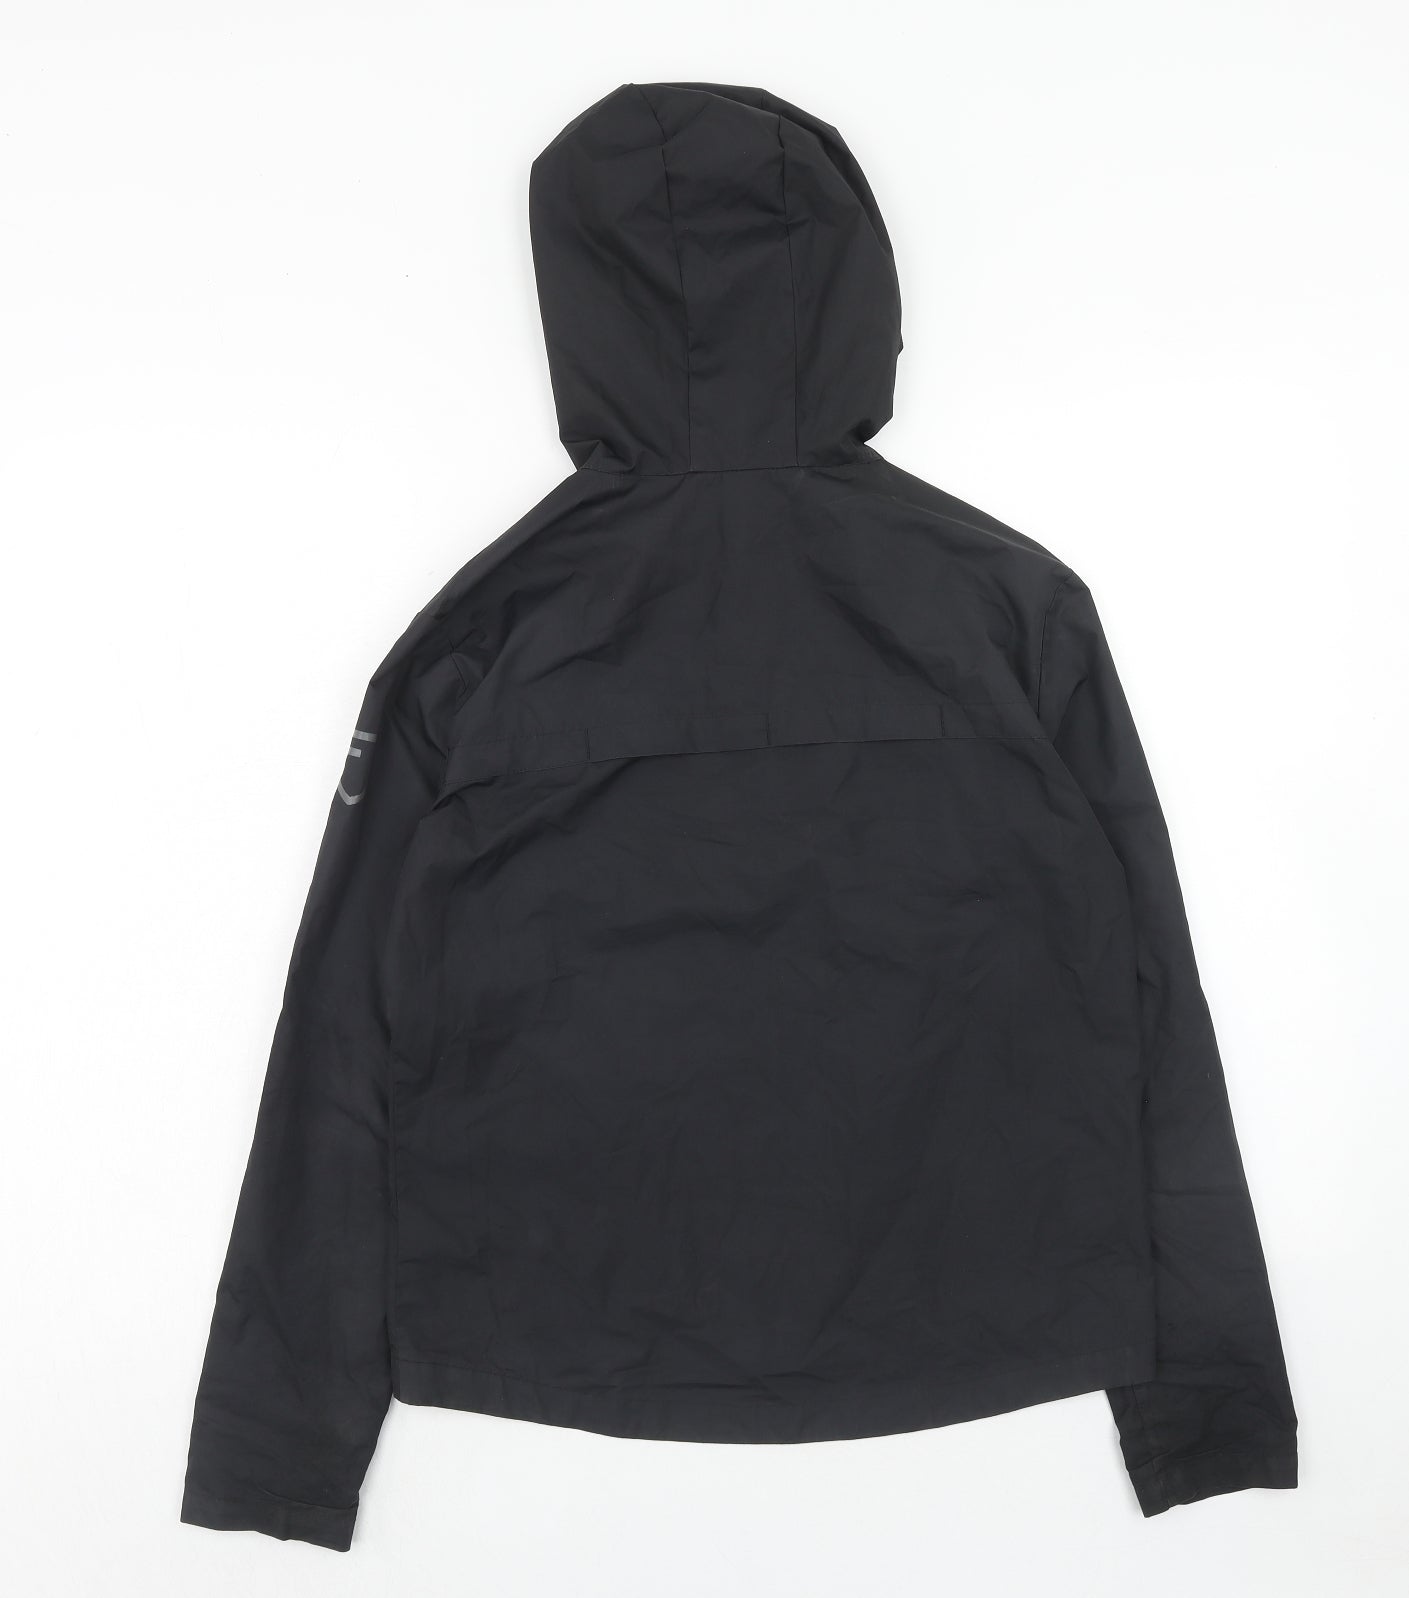 DECATHLON Boys Black Windbreaker Jacket Size 14 Years Zip